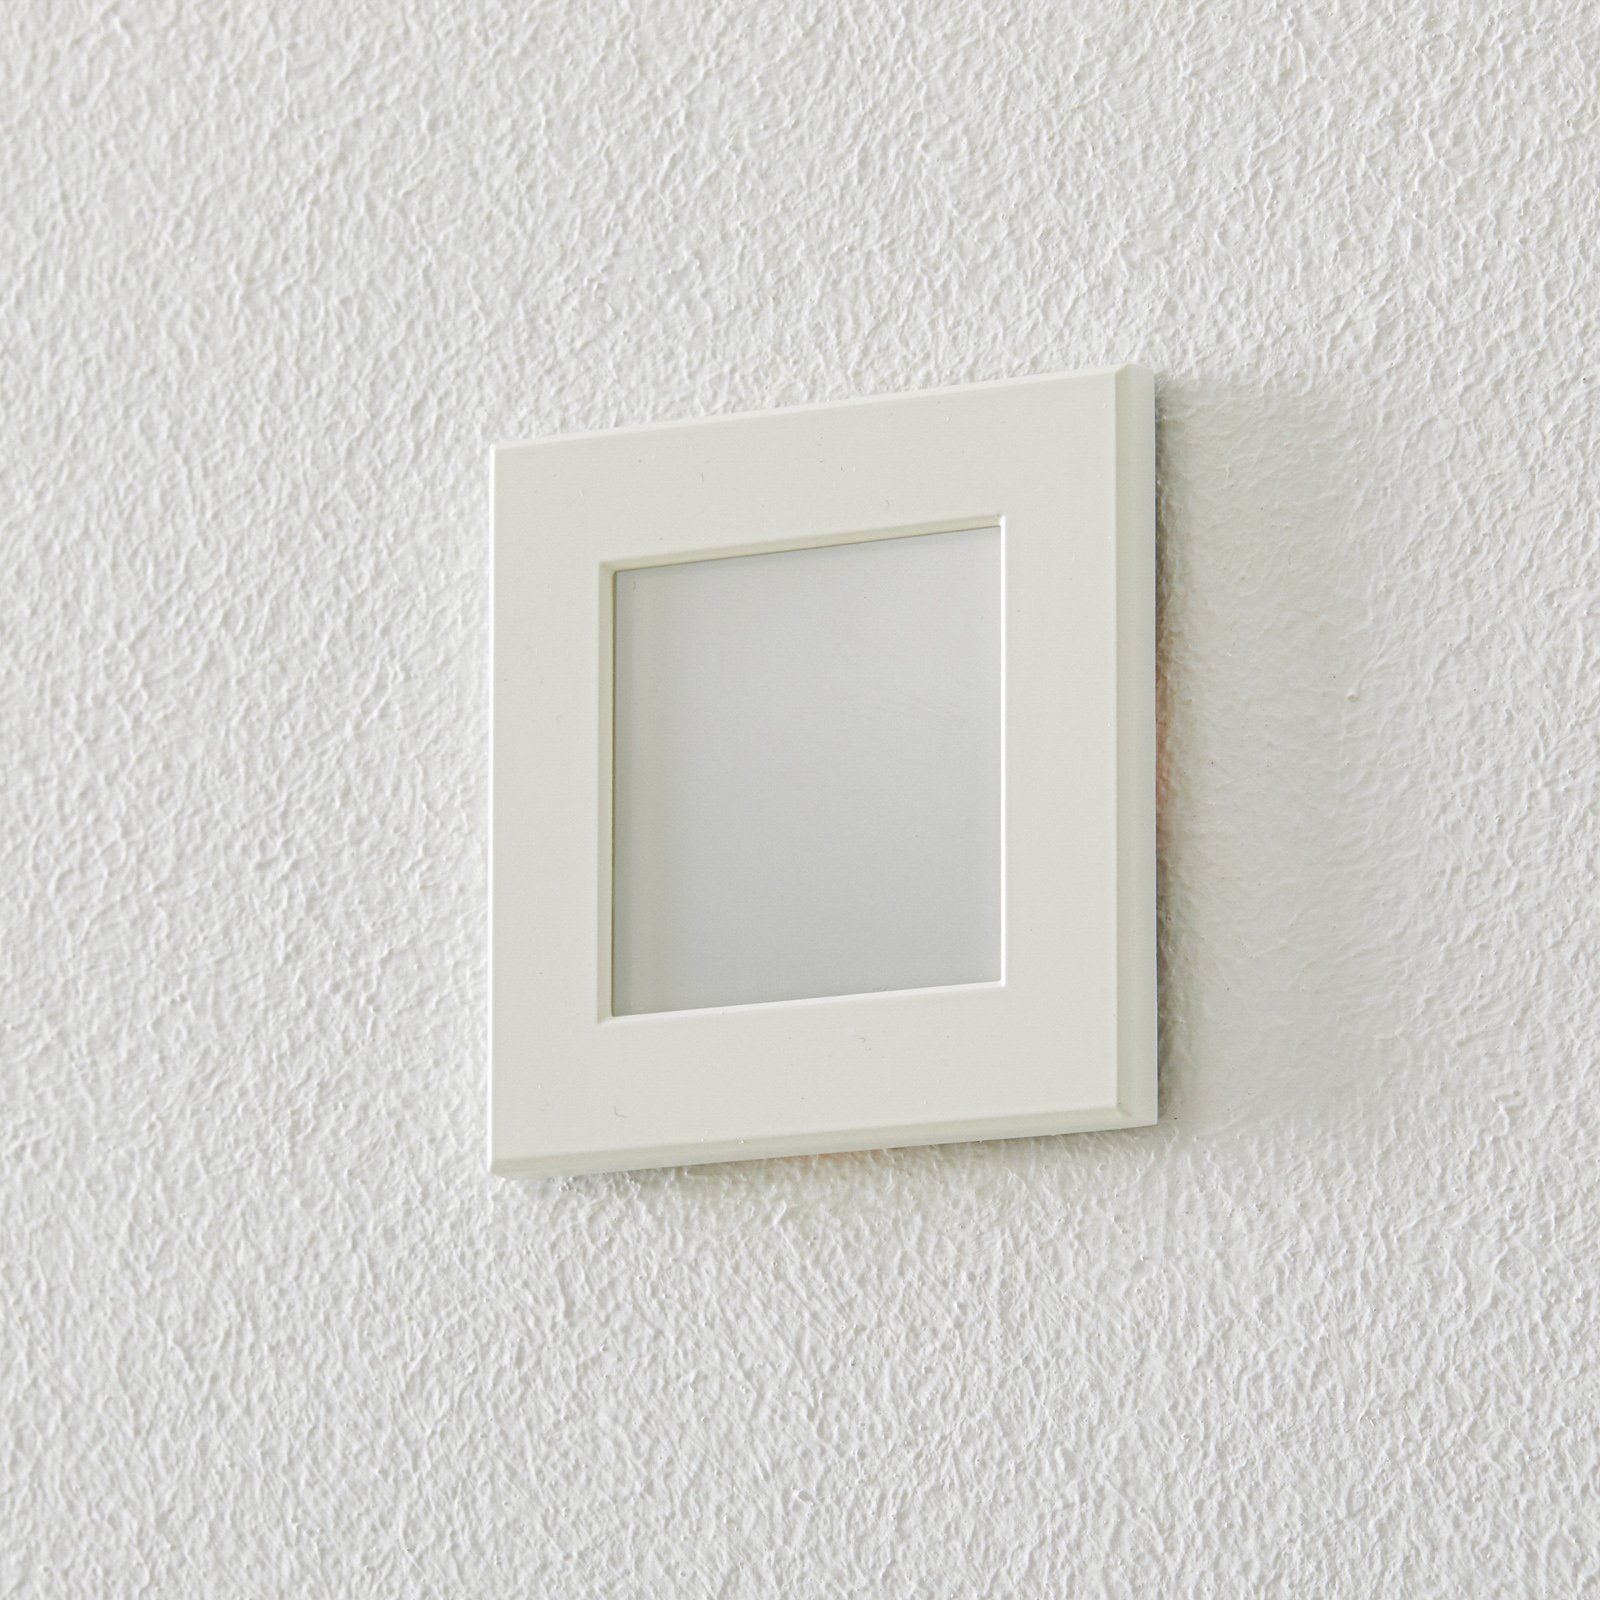 BEGA Accenta wall lamp angular frame white 315 lm